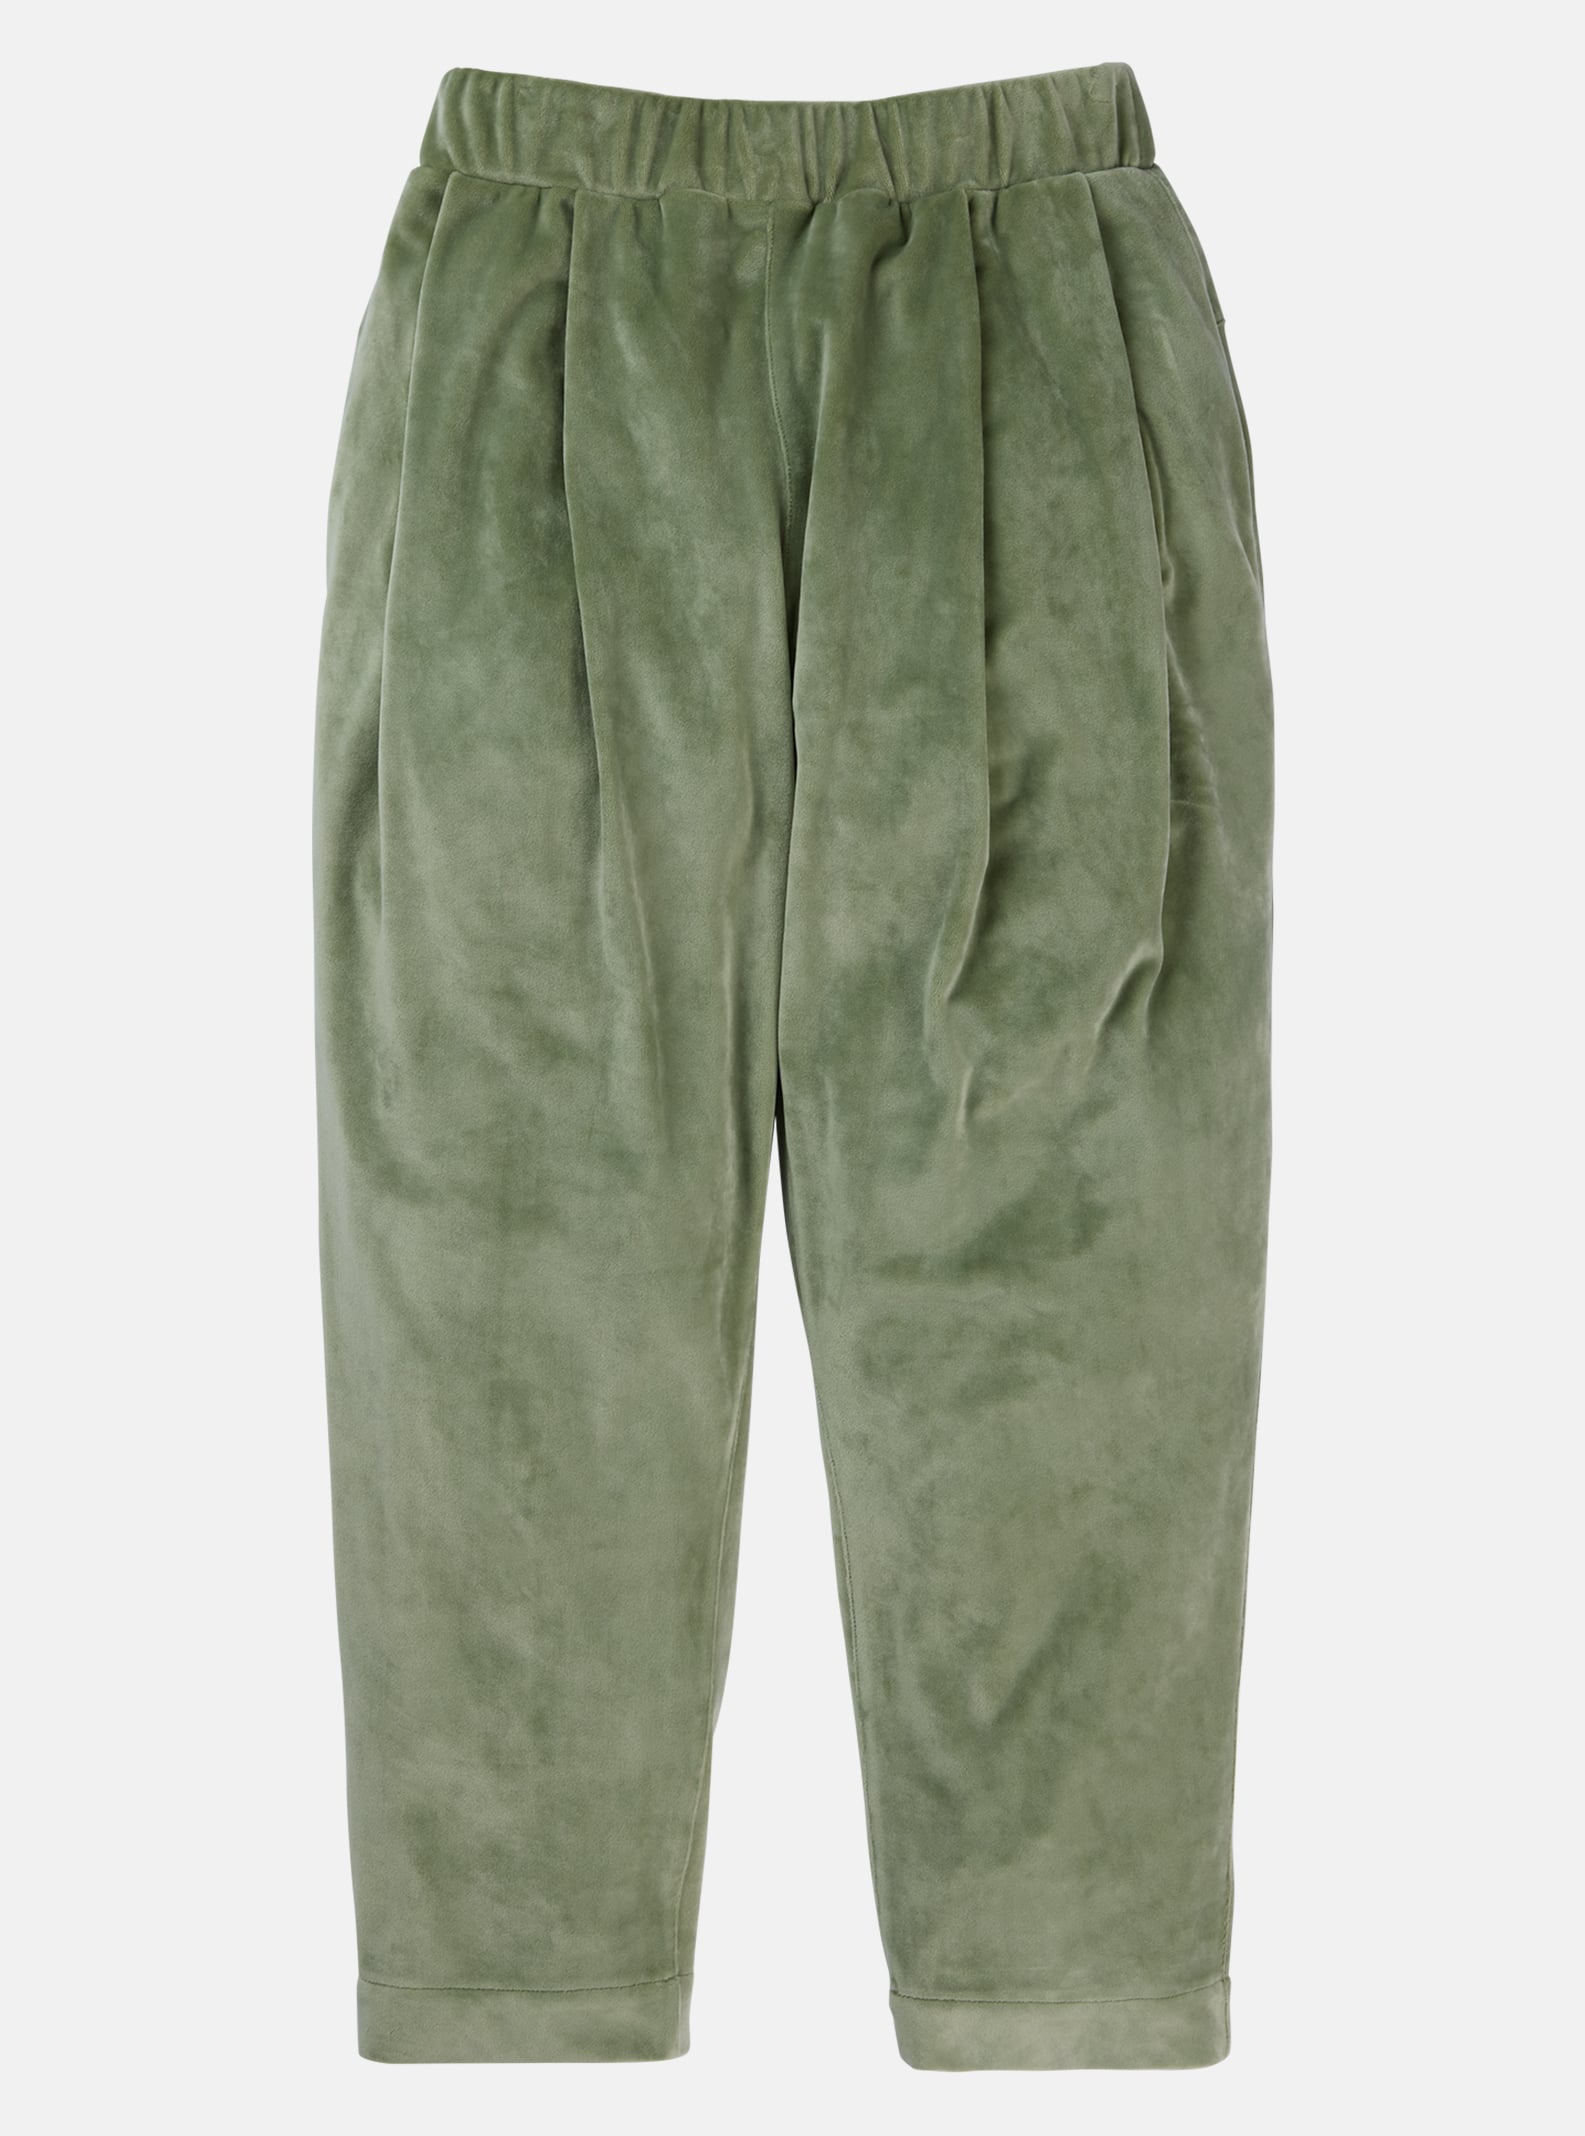 Burton Women's Analog Overclear Pants, Hedge Green, M